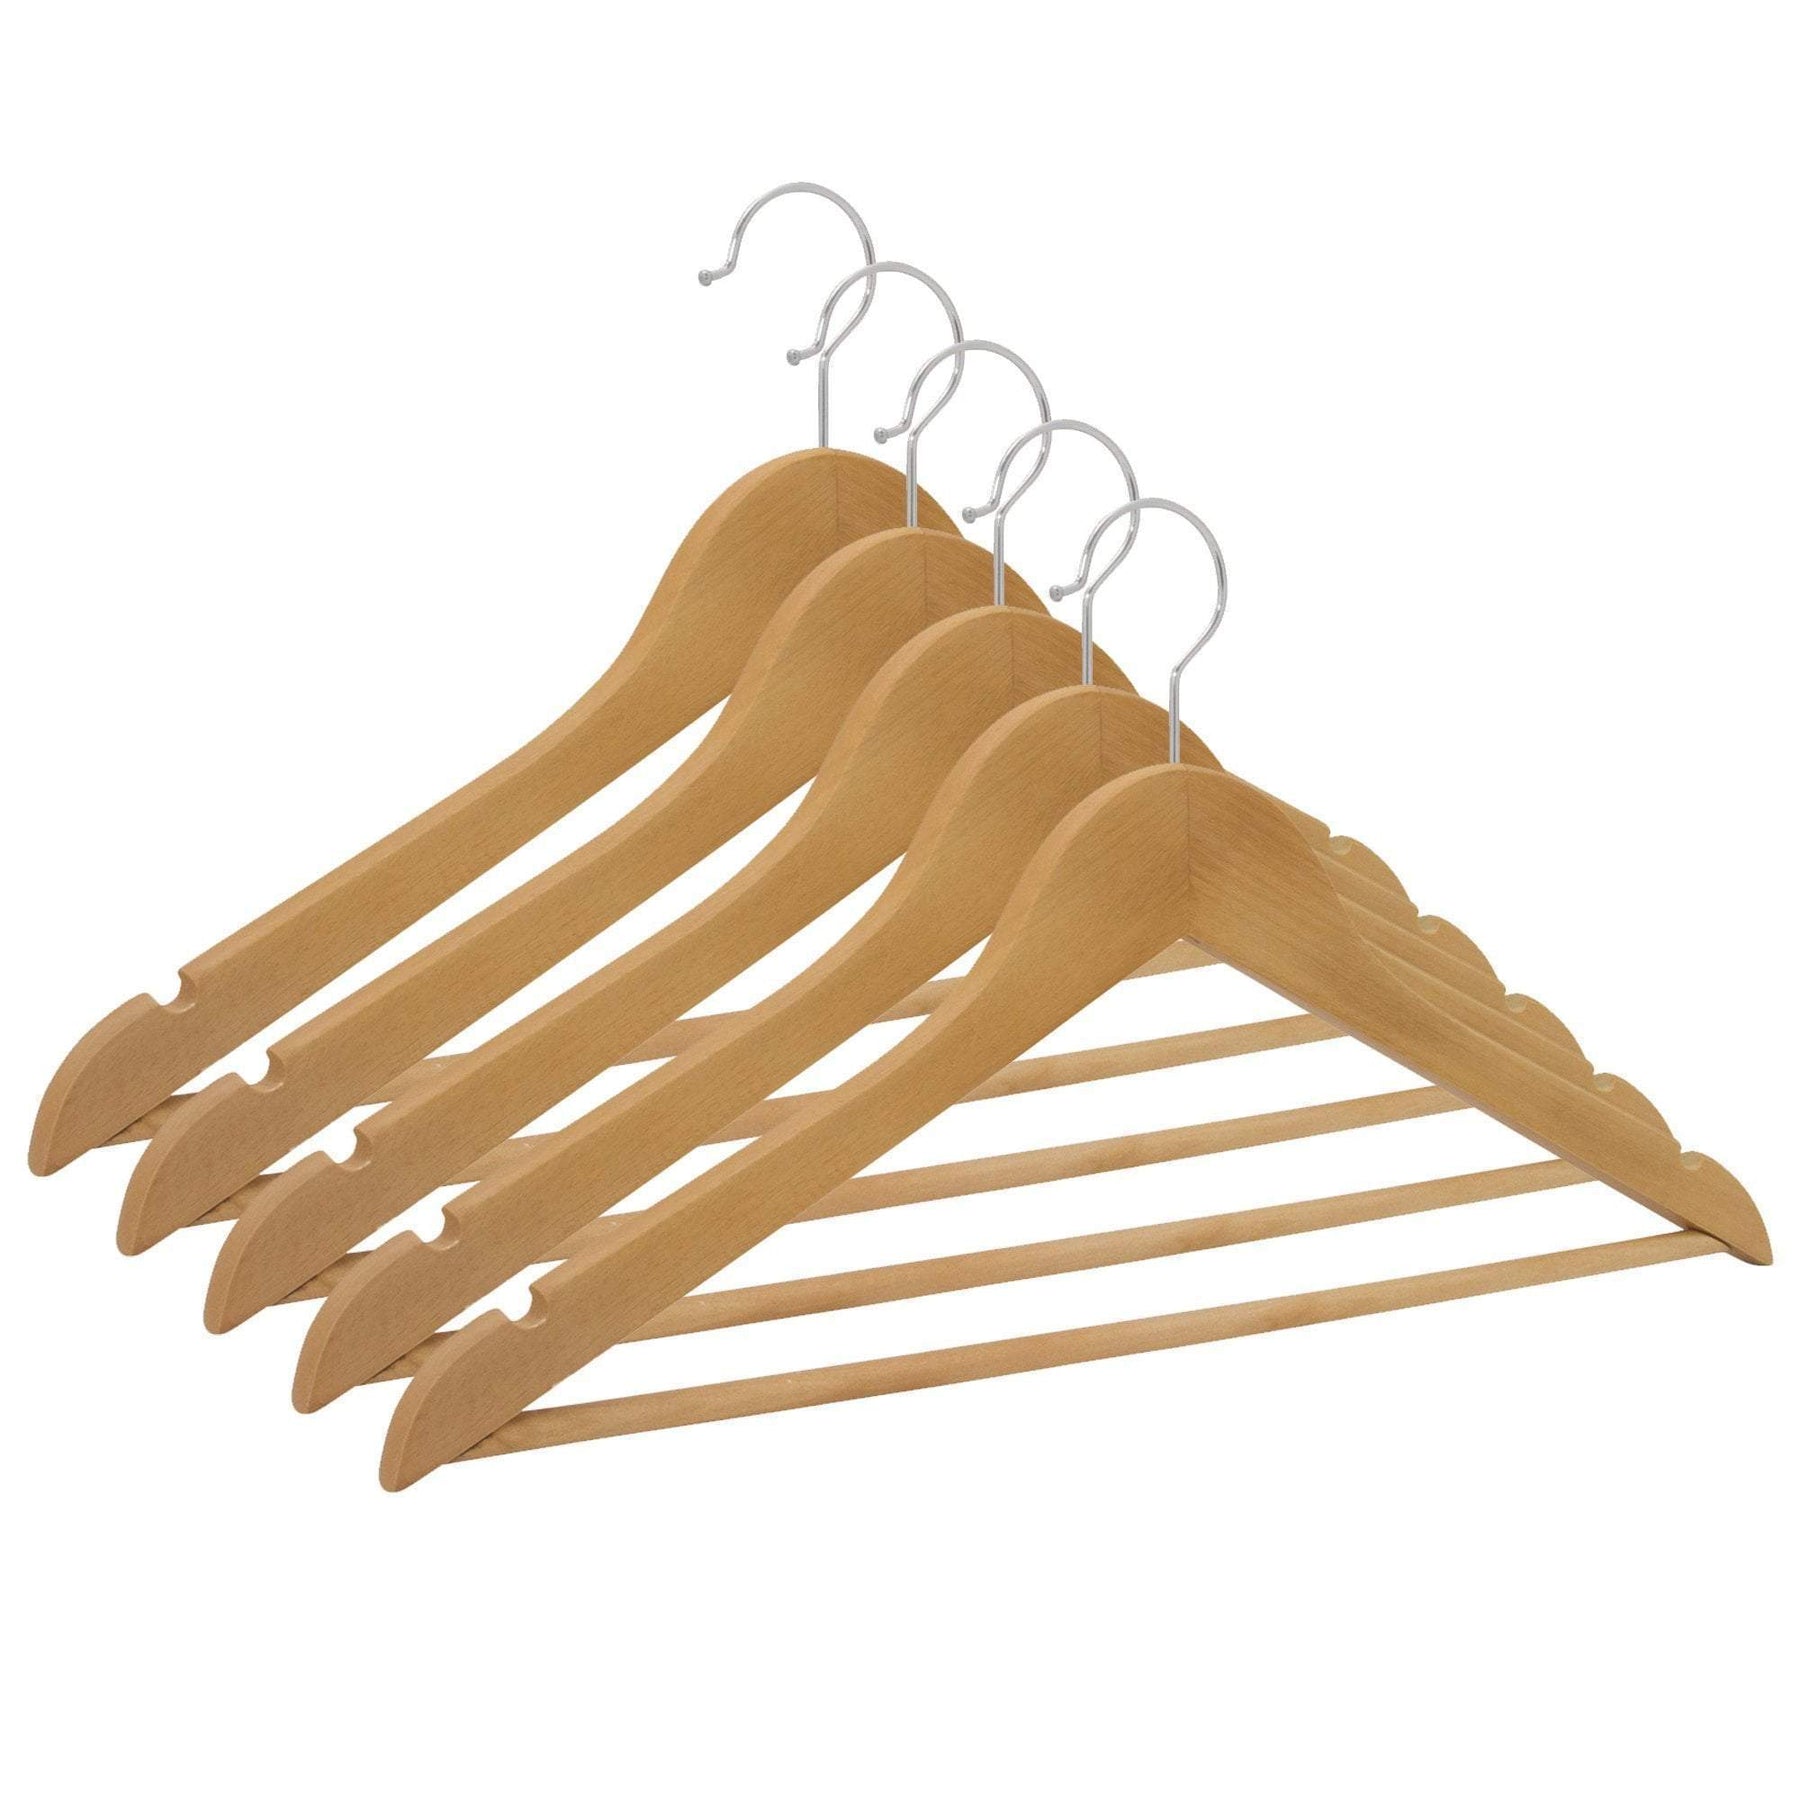 https://cdn.shopify.com/s/files/1/2993/5404/products/closet-complete-wood-hangers-premium-wood-suit-hangers-79601-7163186085973_1800x1800.jpg?v=1552520092